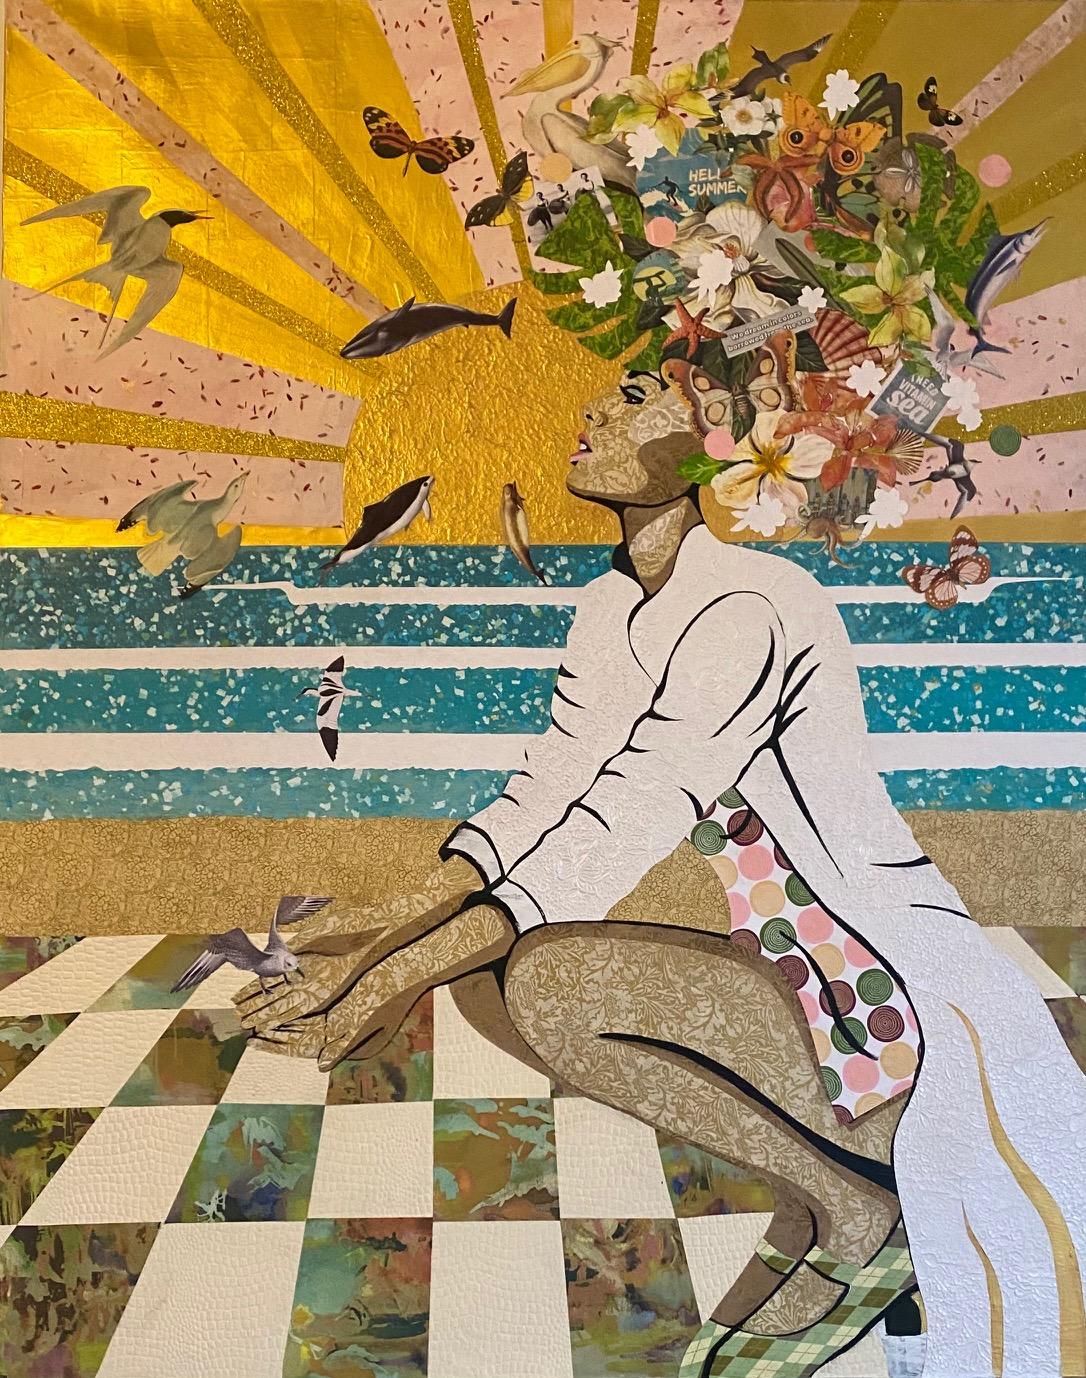 « Borrowed by the Sea » (Borrowed by the Sea) - Le rêve en couleurs - Mixed Media Art de Cabell Molina